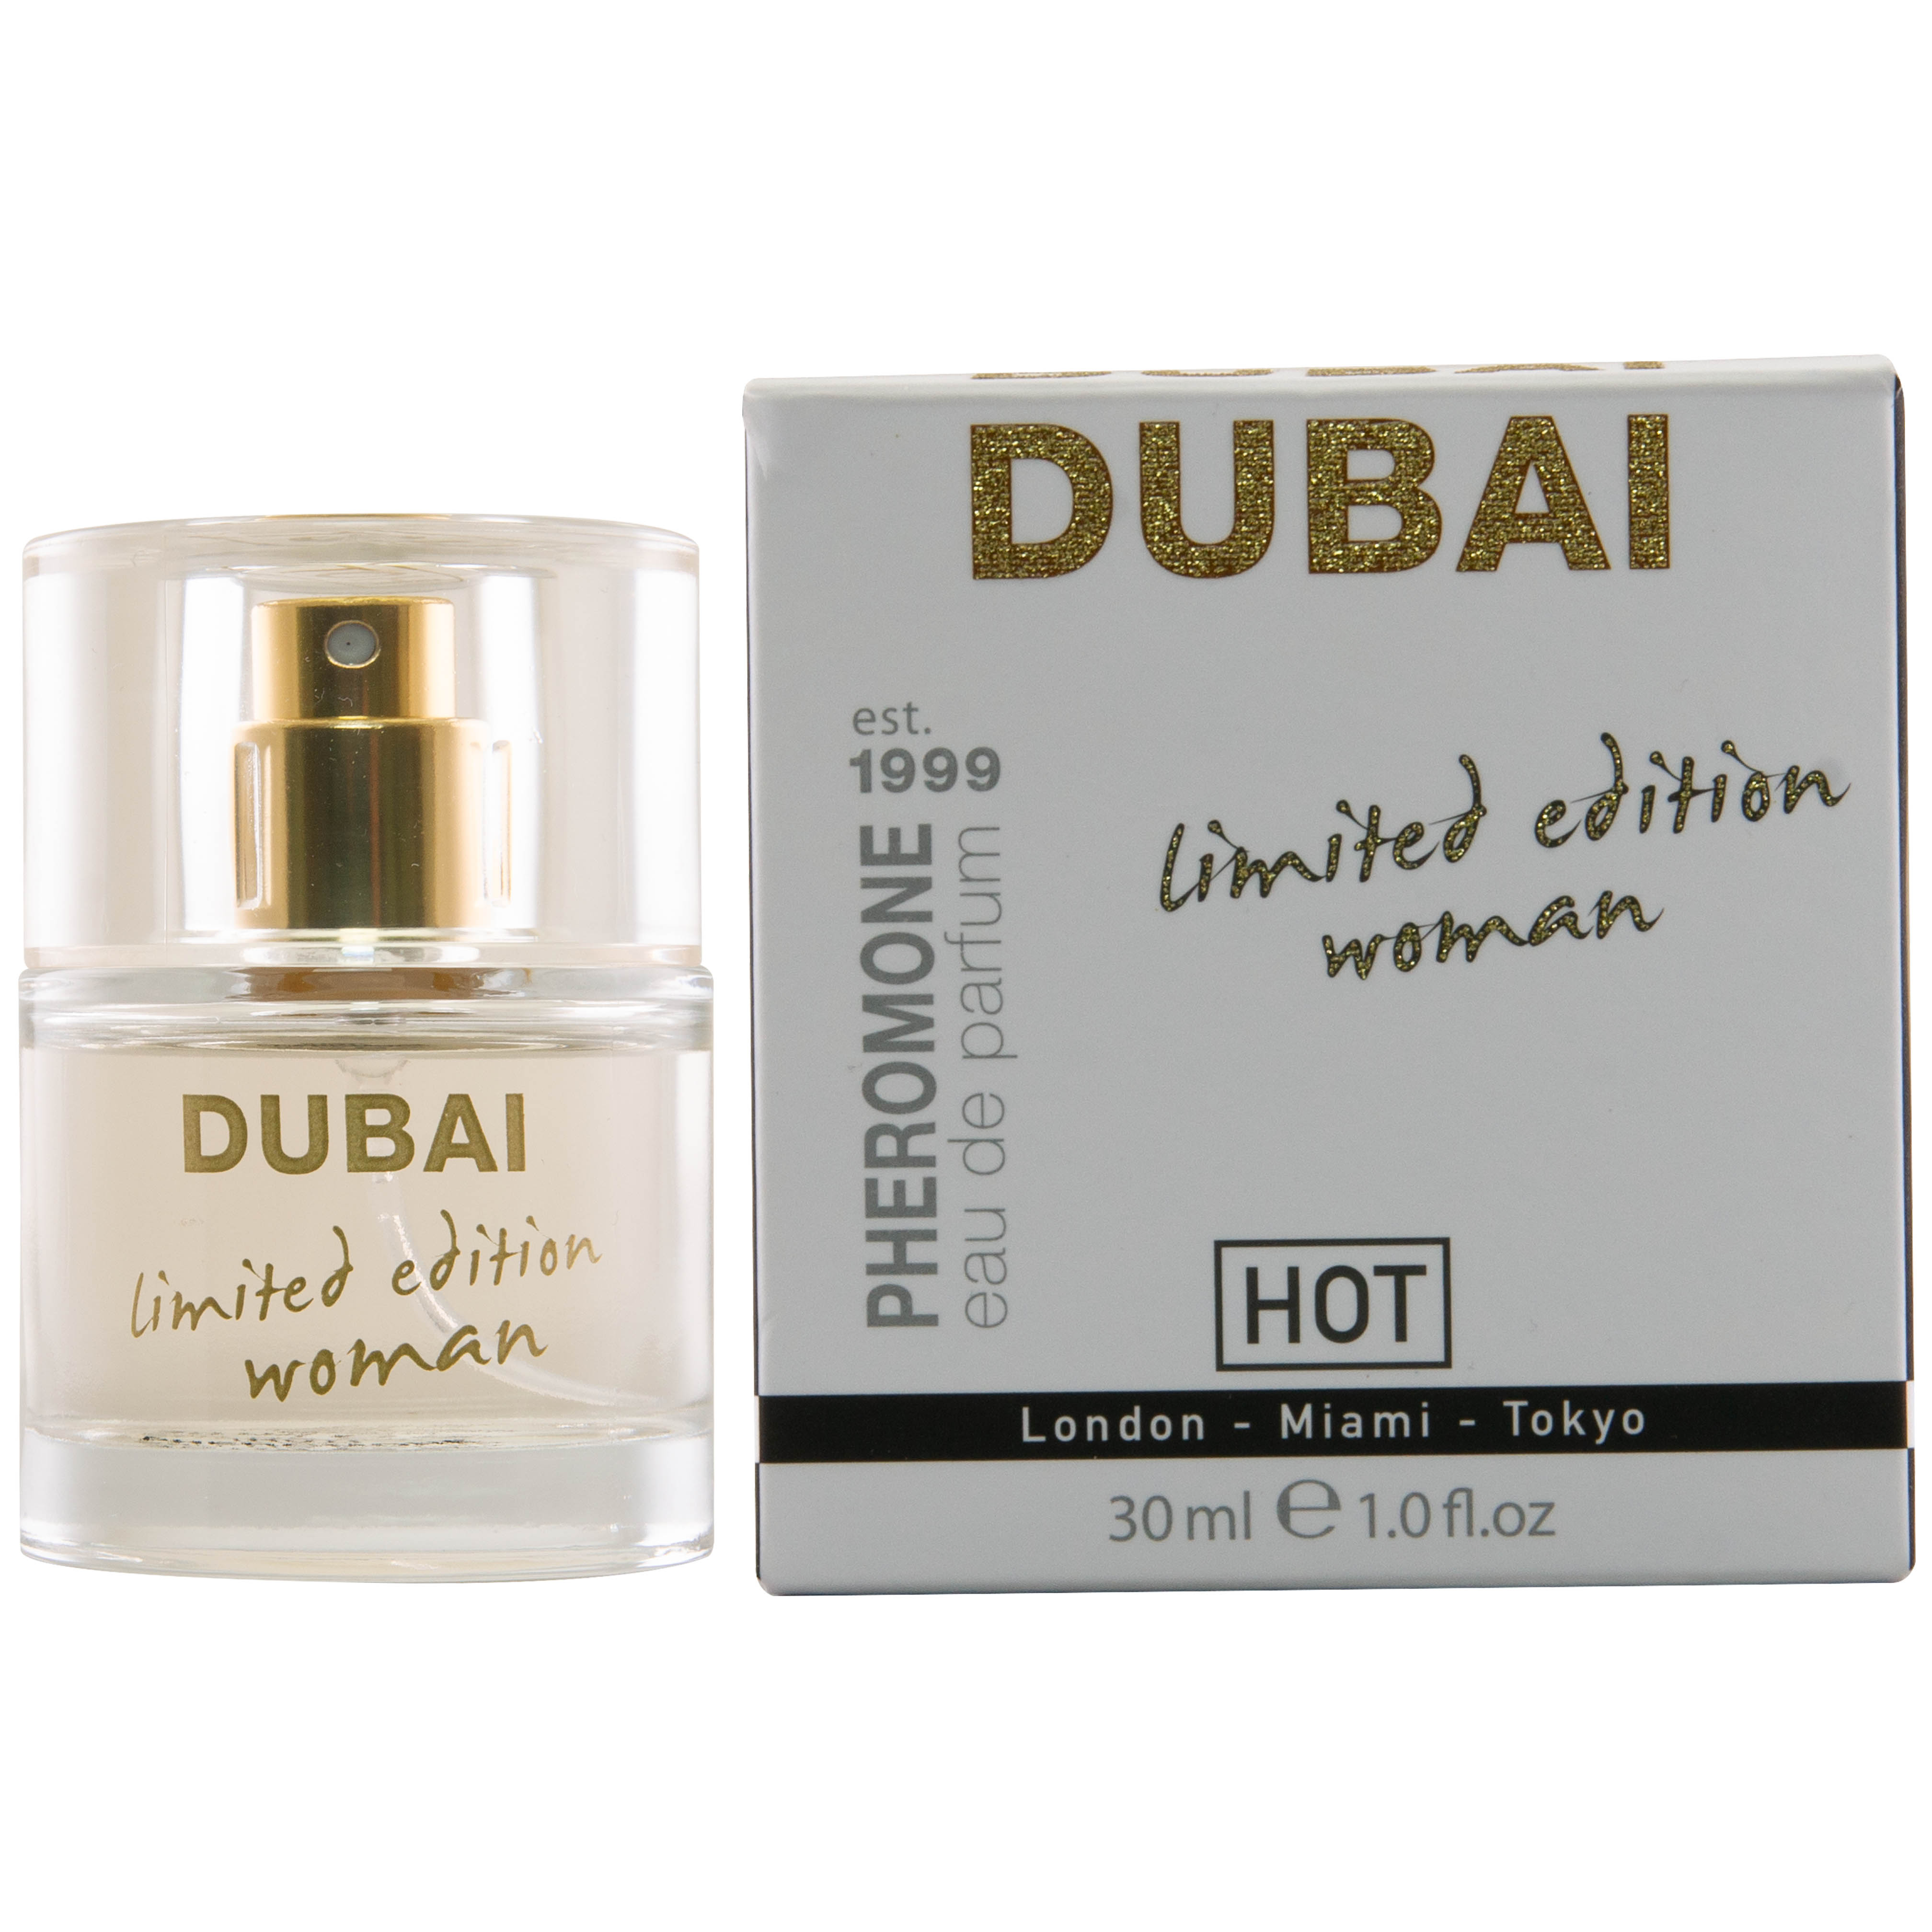 HOT Pheromon-Parfum Dubai woman 30ml